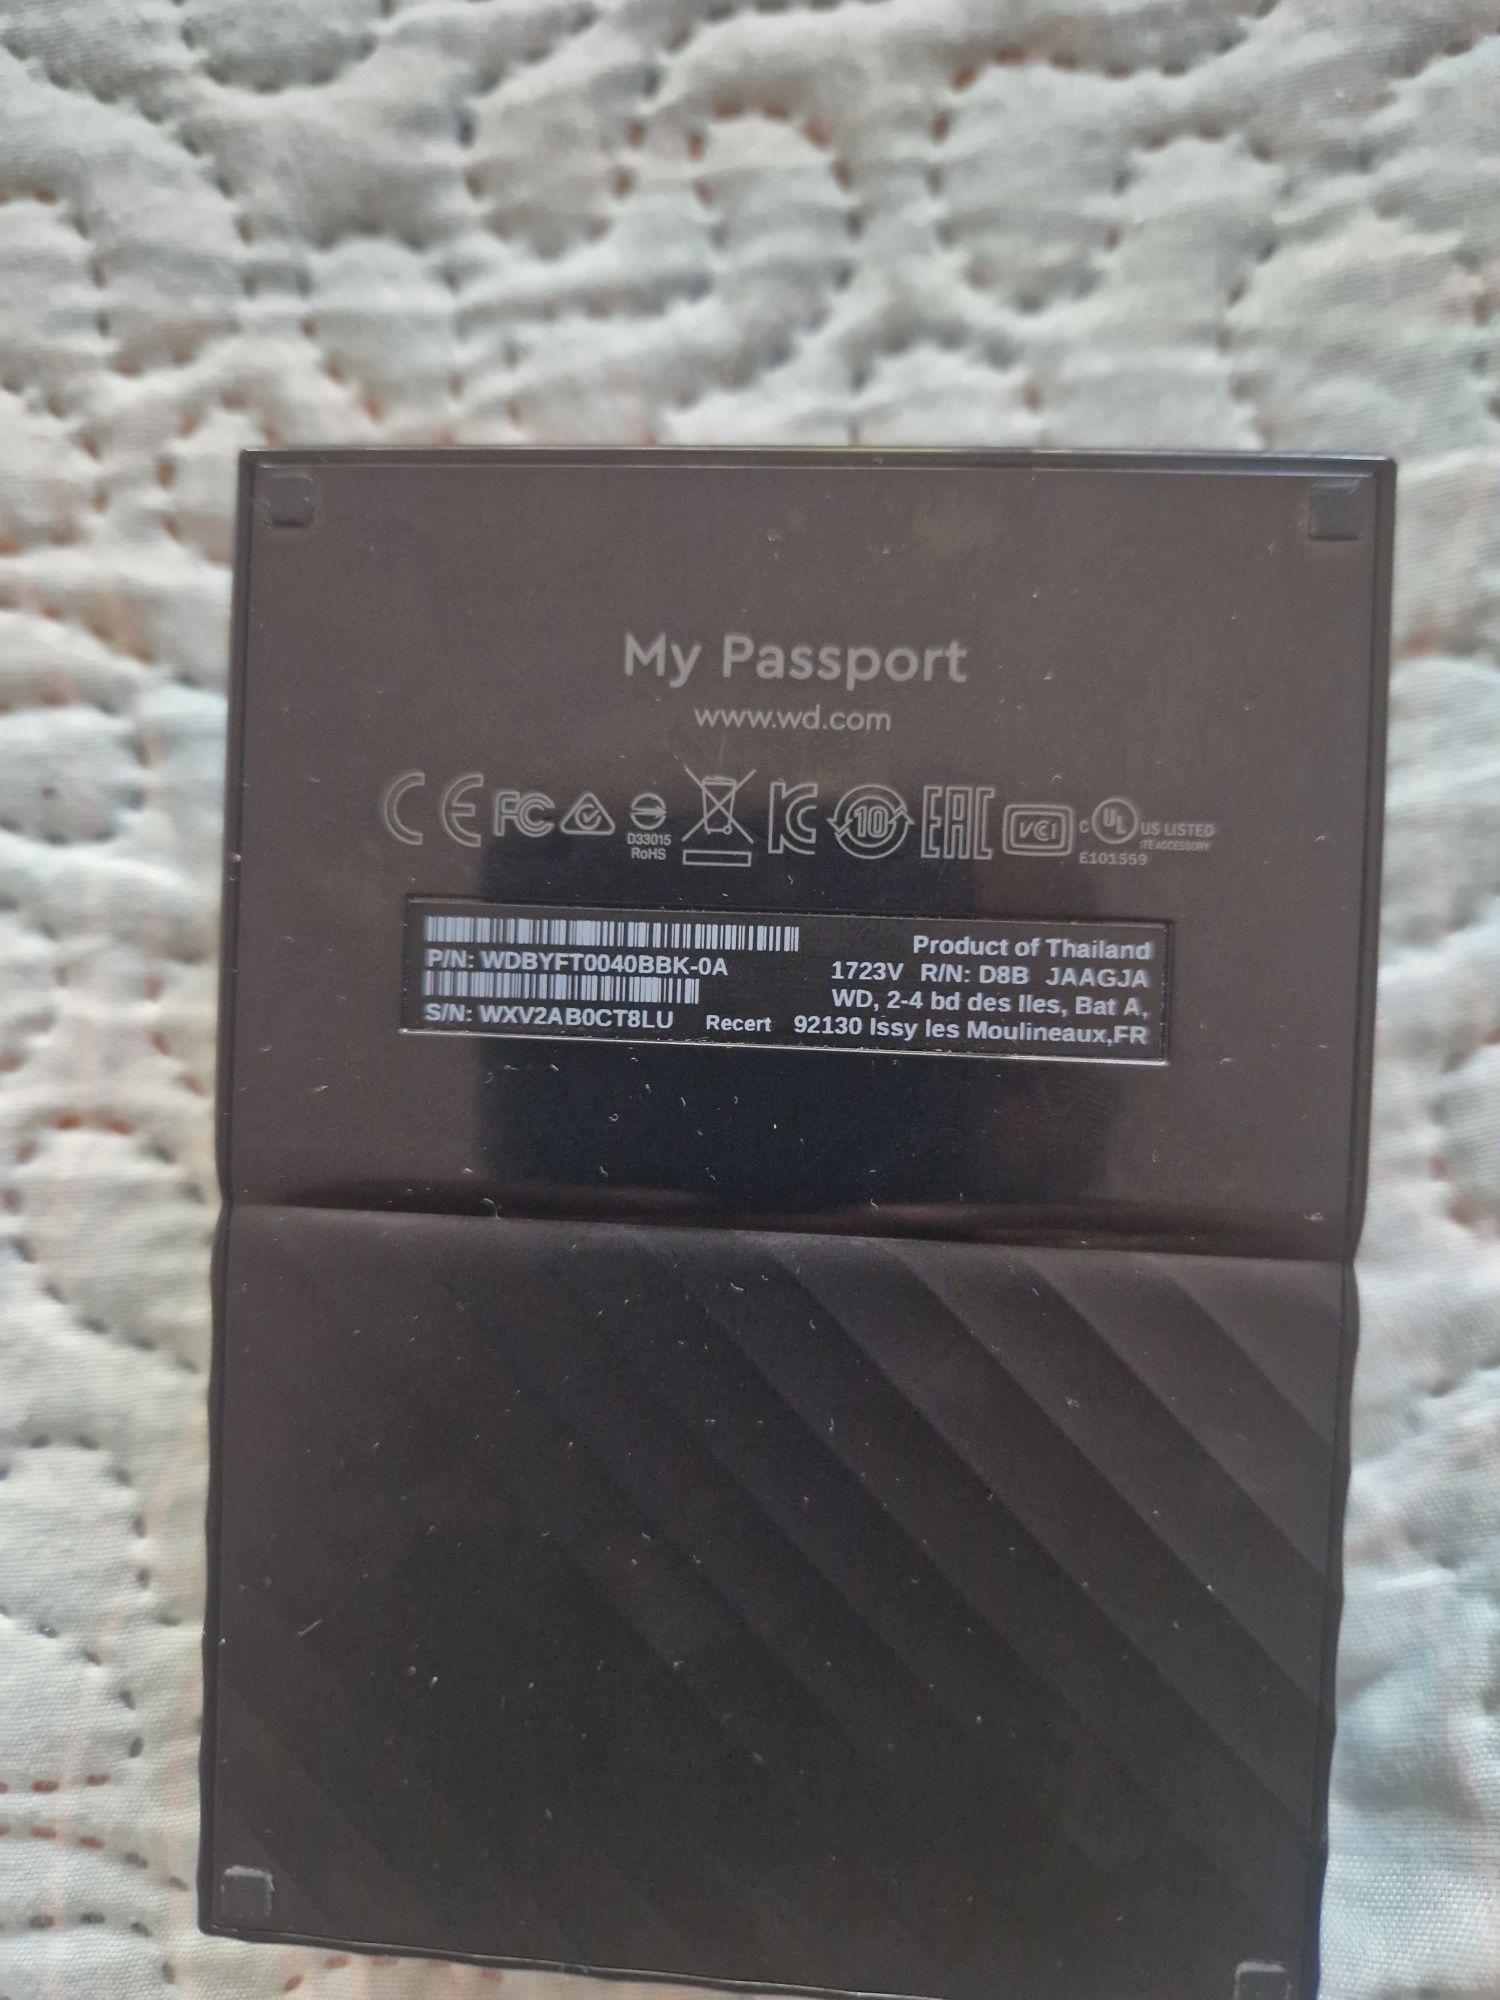 Passport disco externo